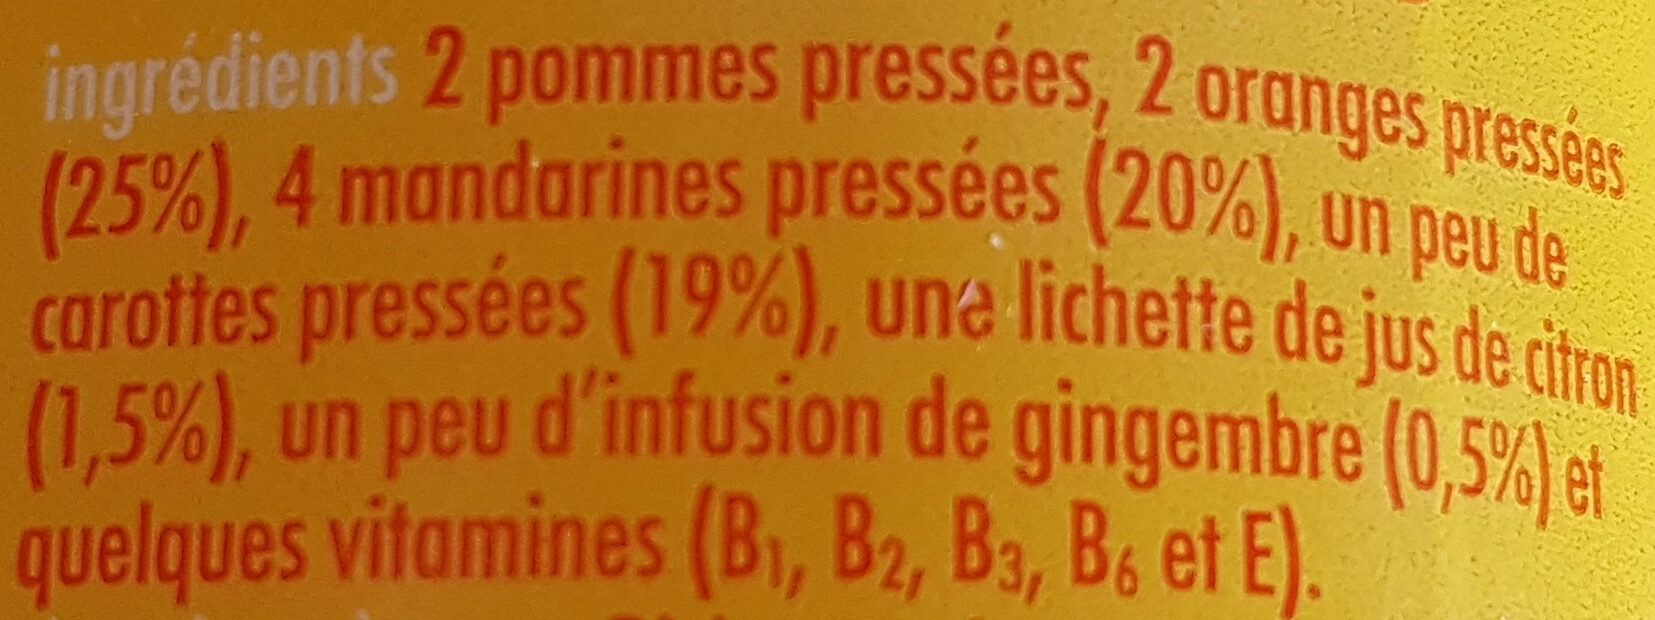 Zest Défense - Ingredients - fr